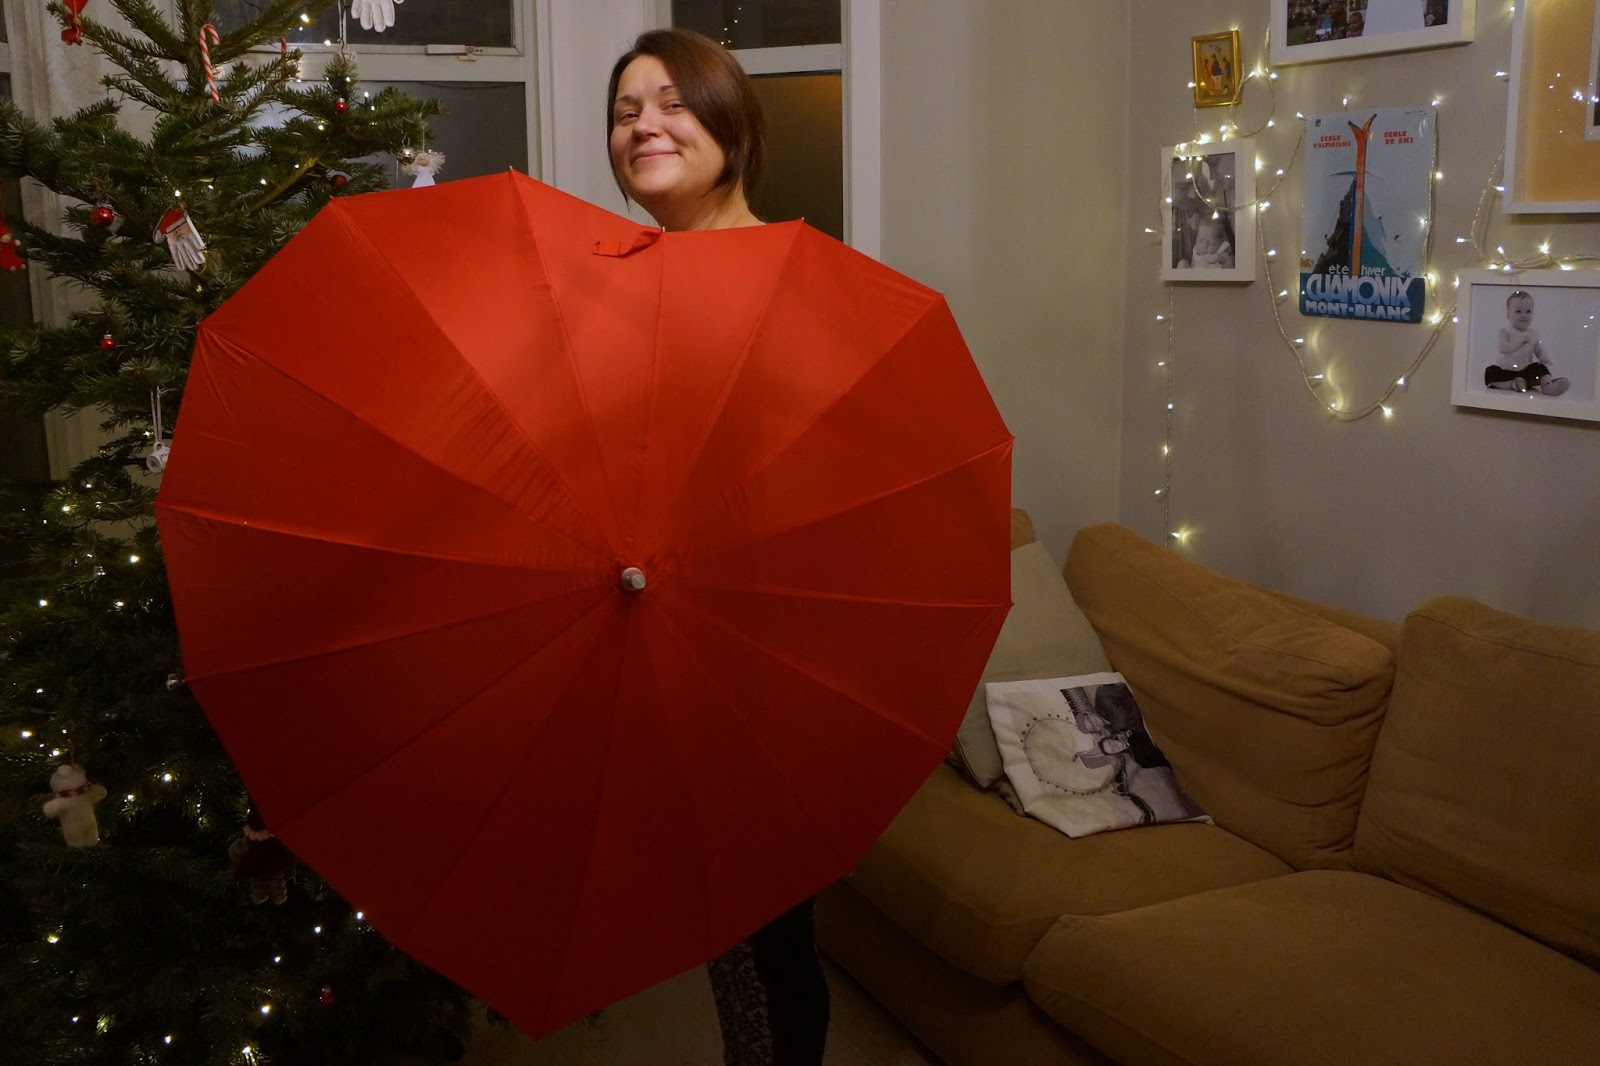 red heart shaped umbrella